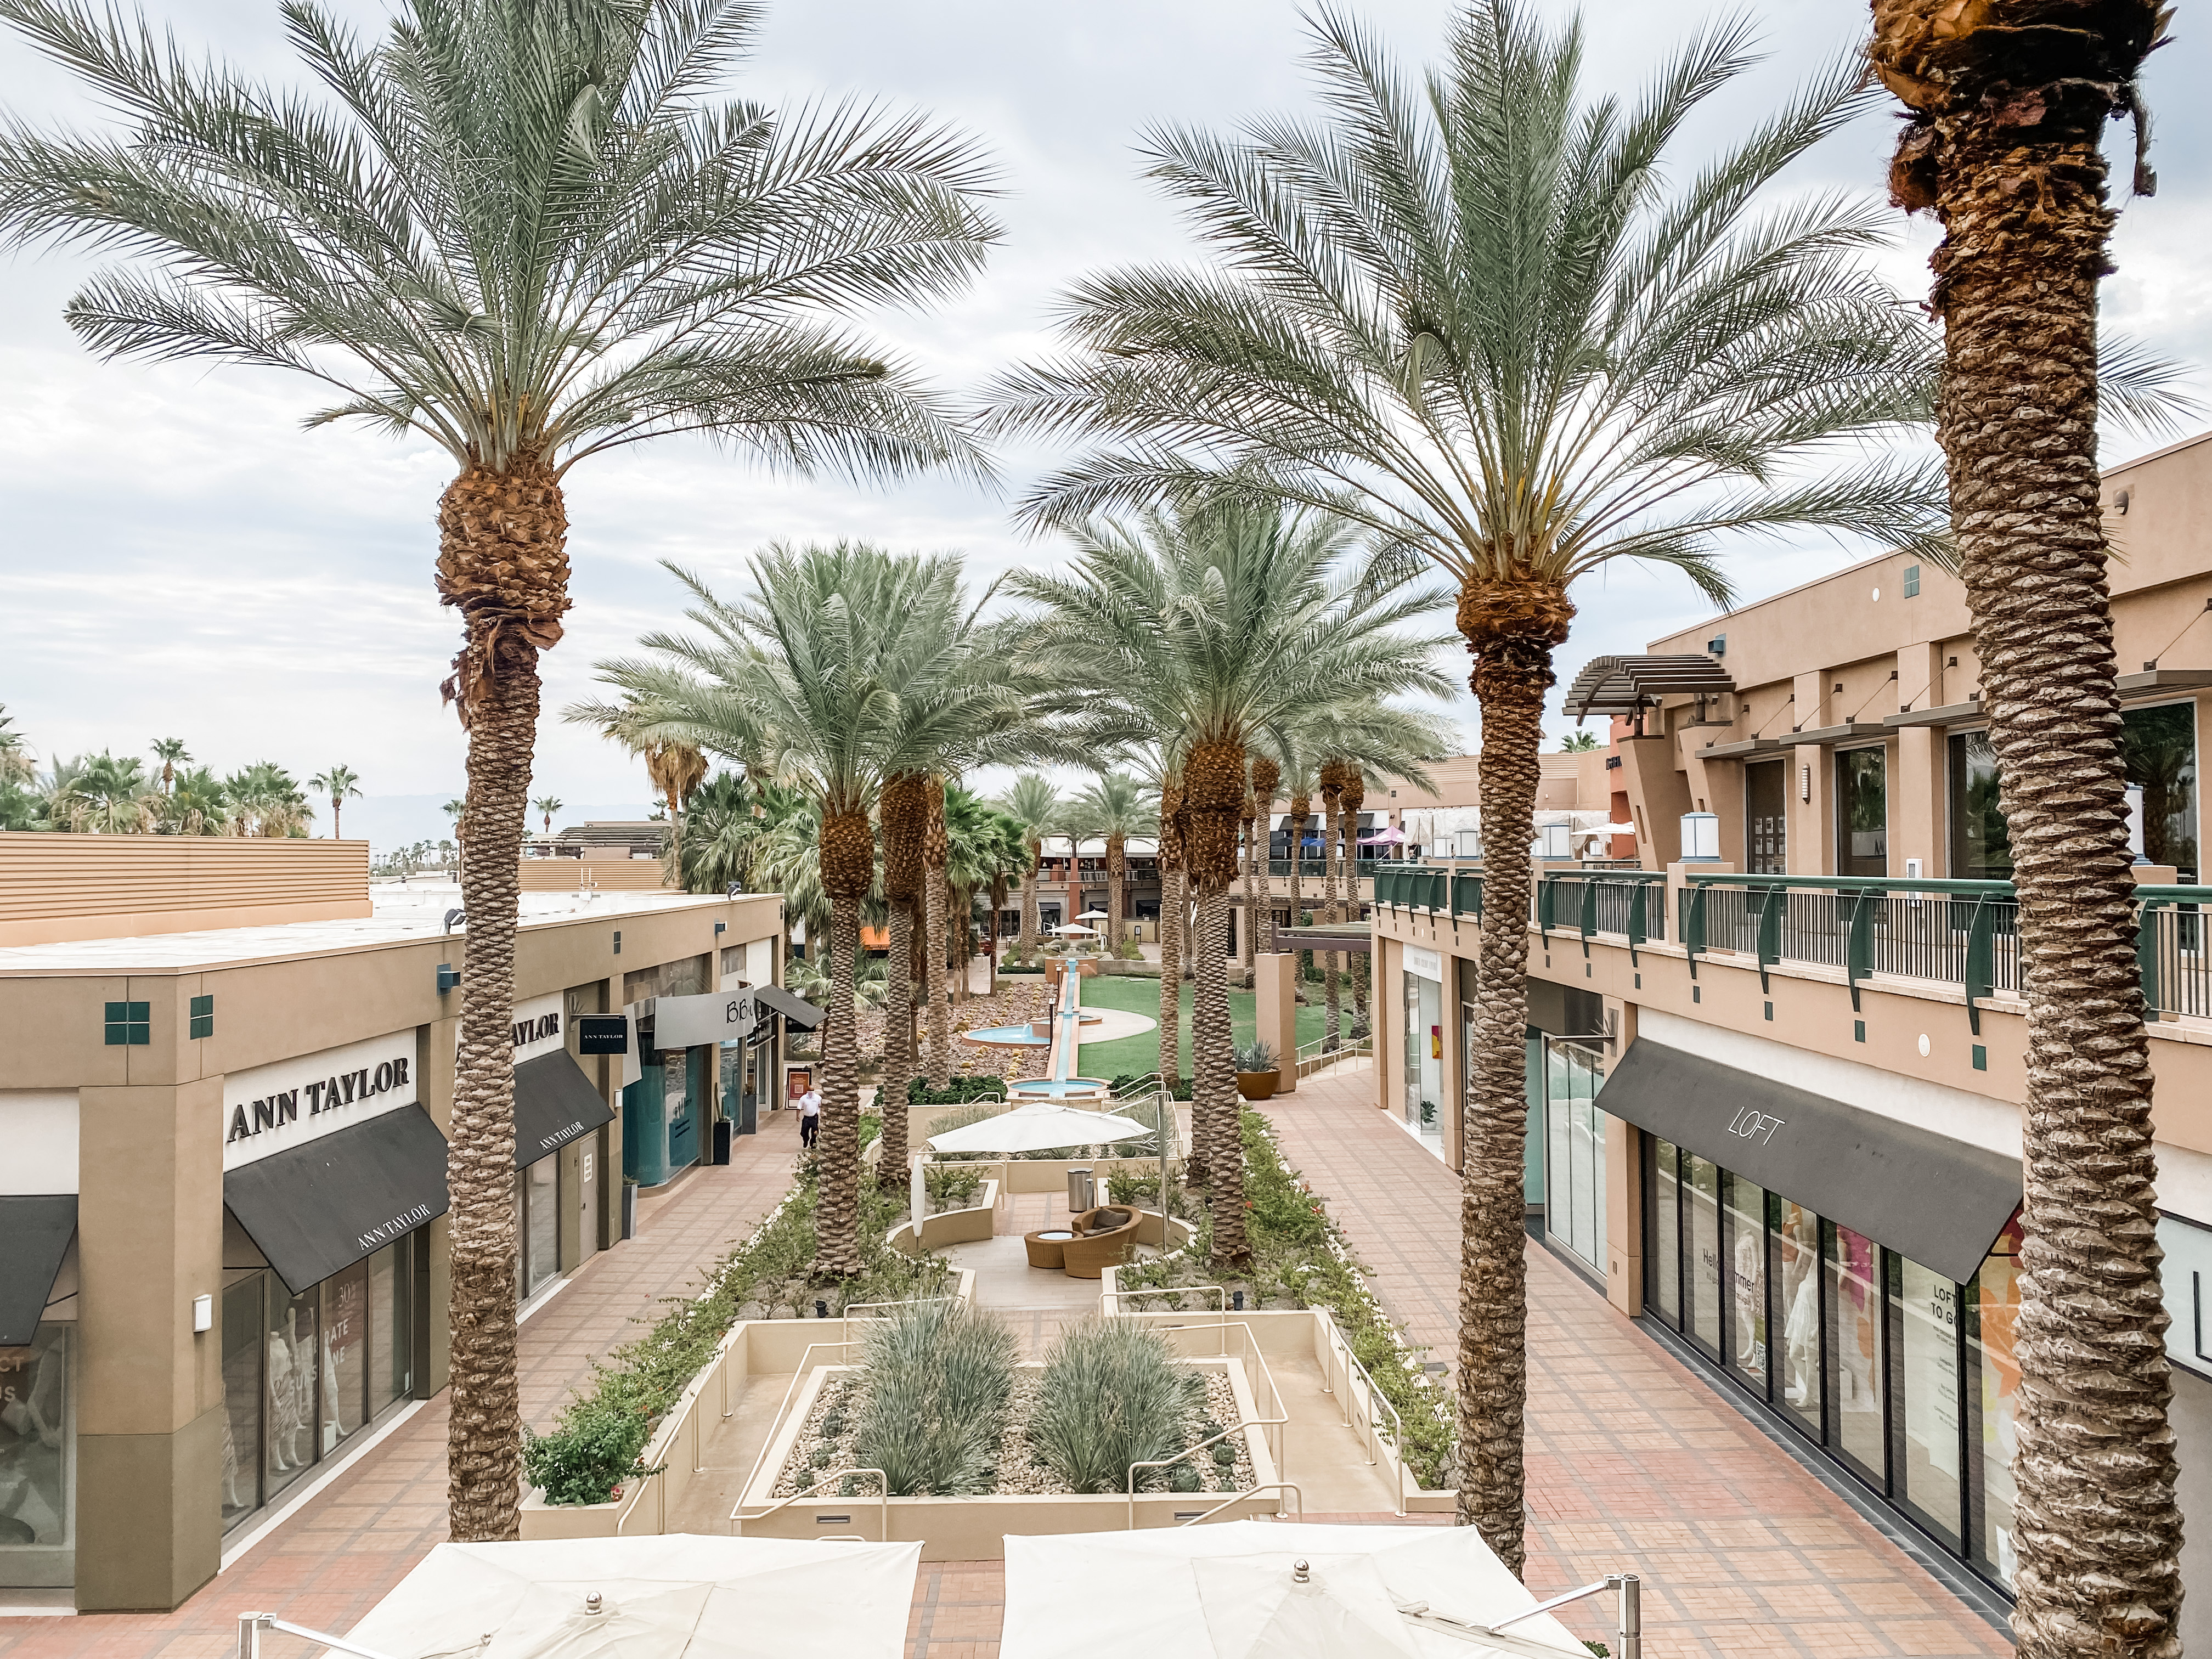 Coachella Valley's premier shopping destination. - Picture of The